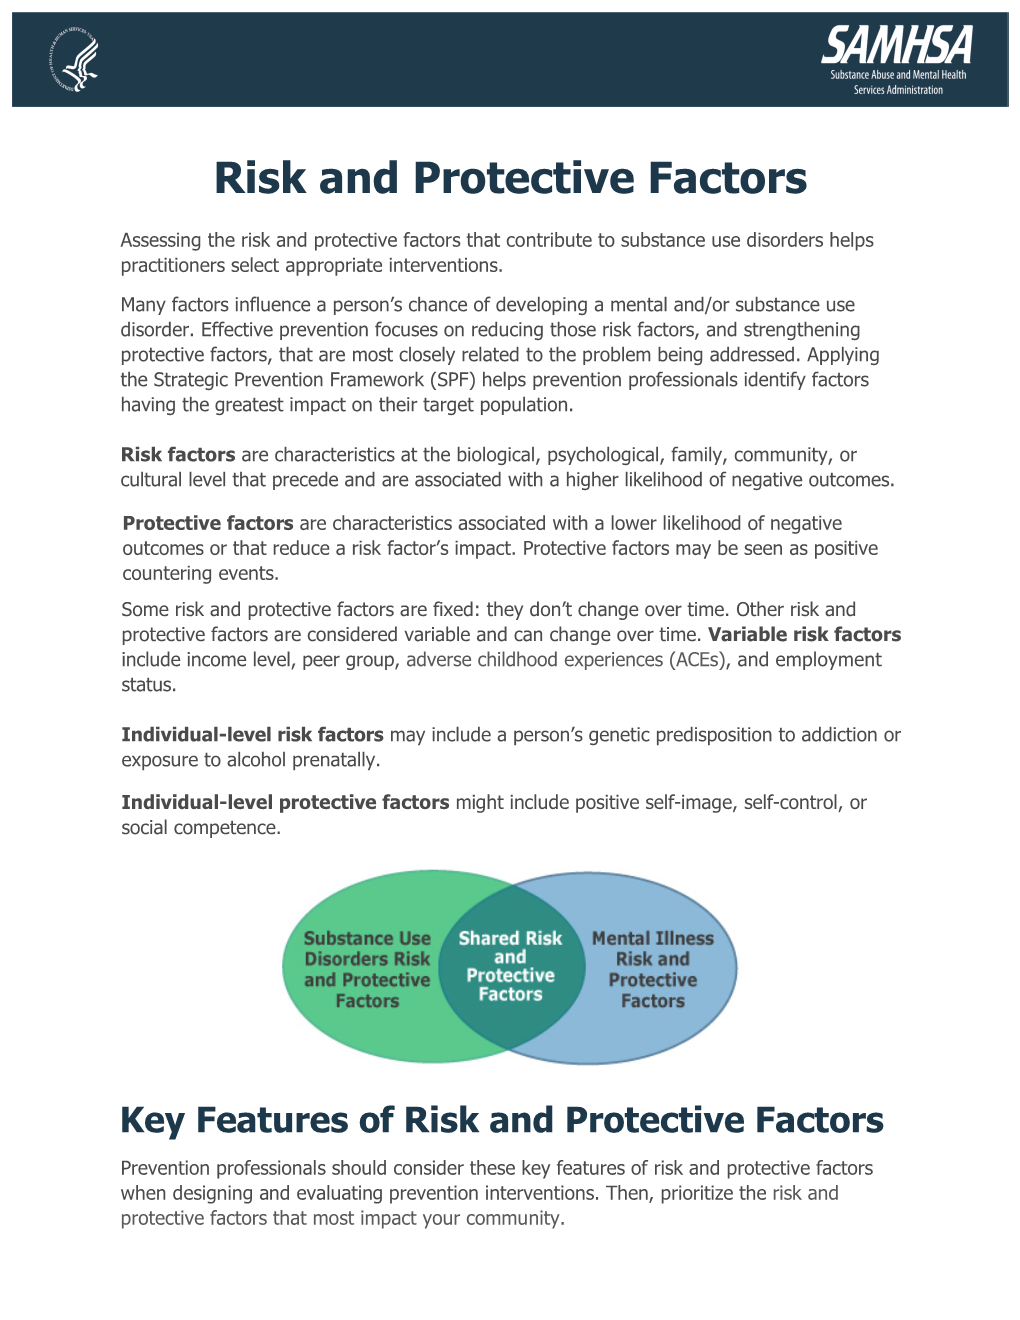 SAMHSA- Risk and Protective Factors